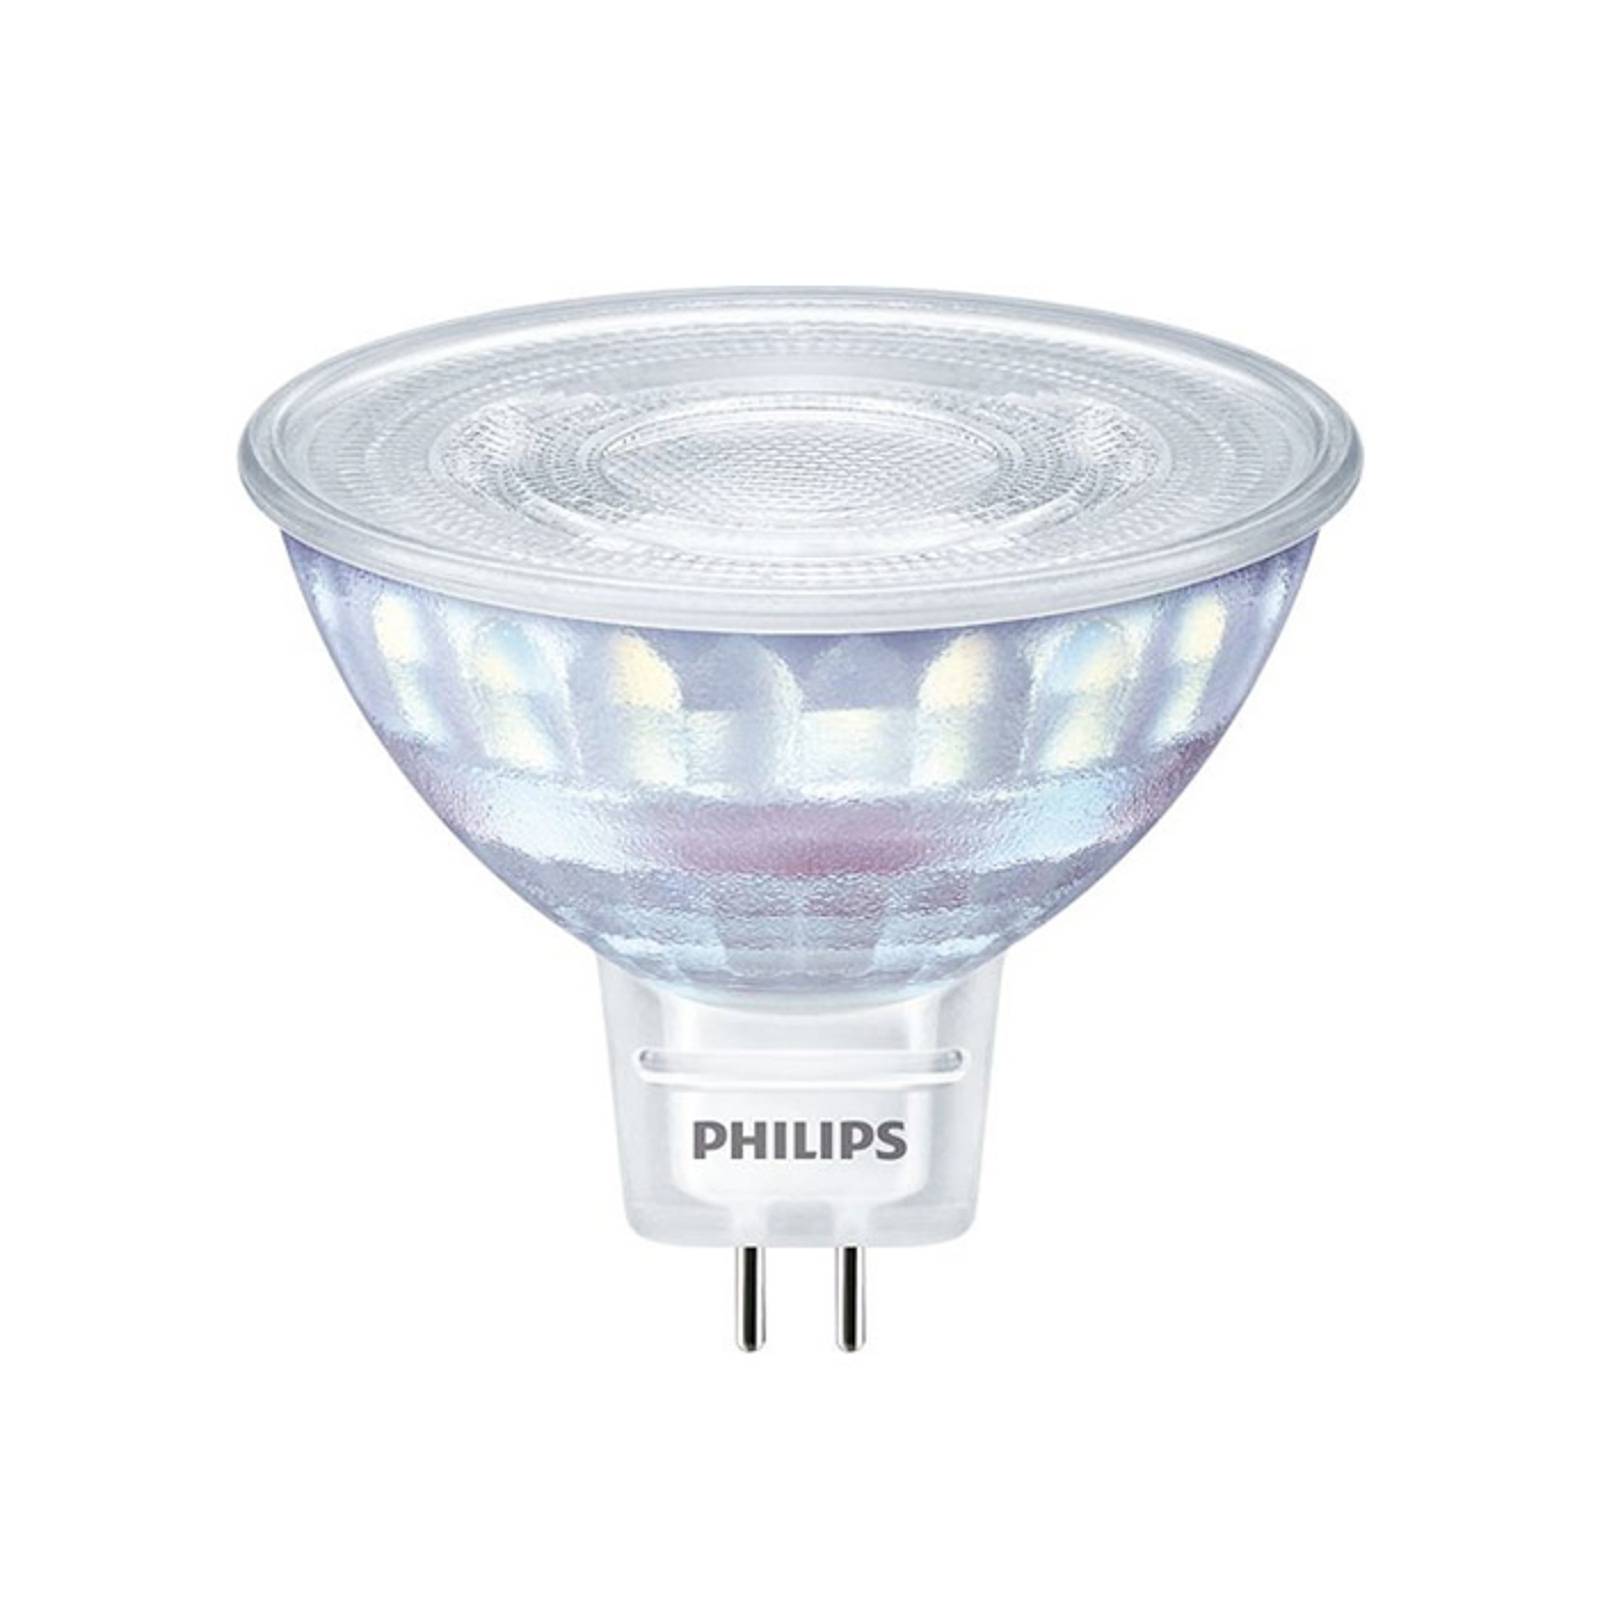 Philips LED Reflektor GU5,3 7W dimmbar warmglow